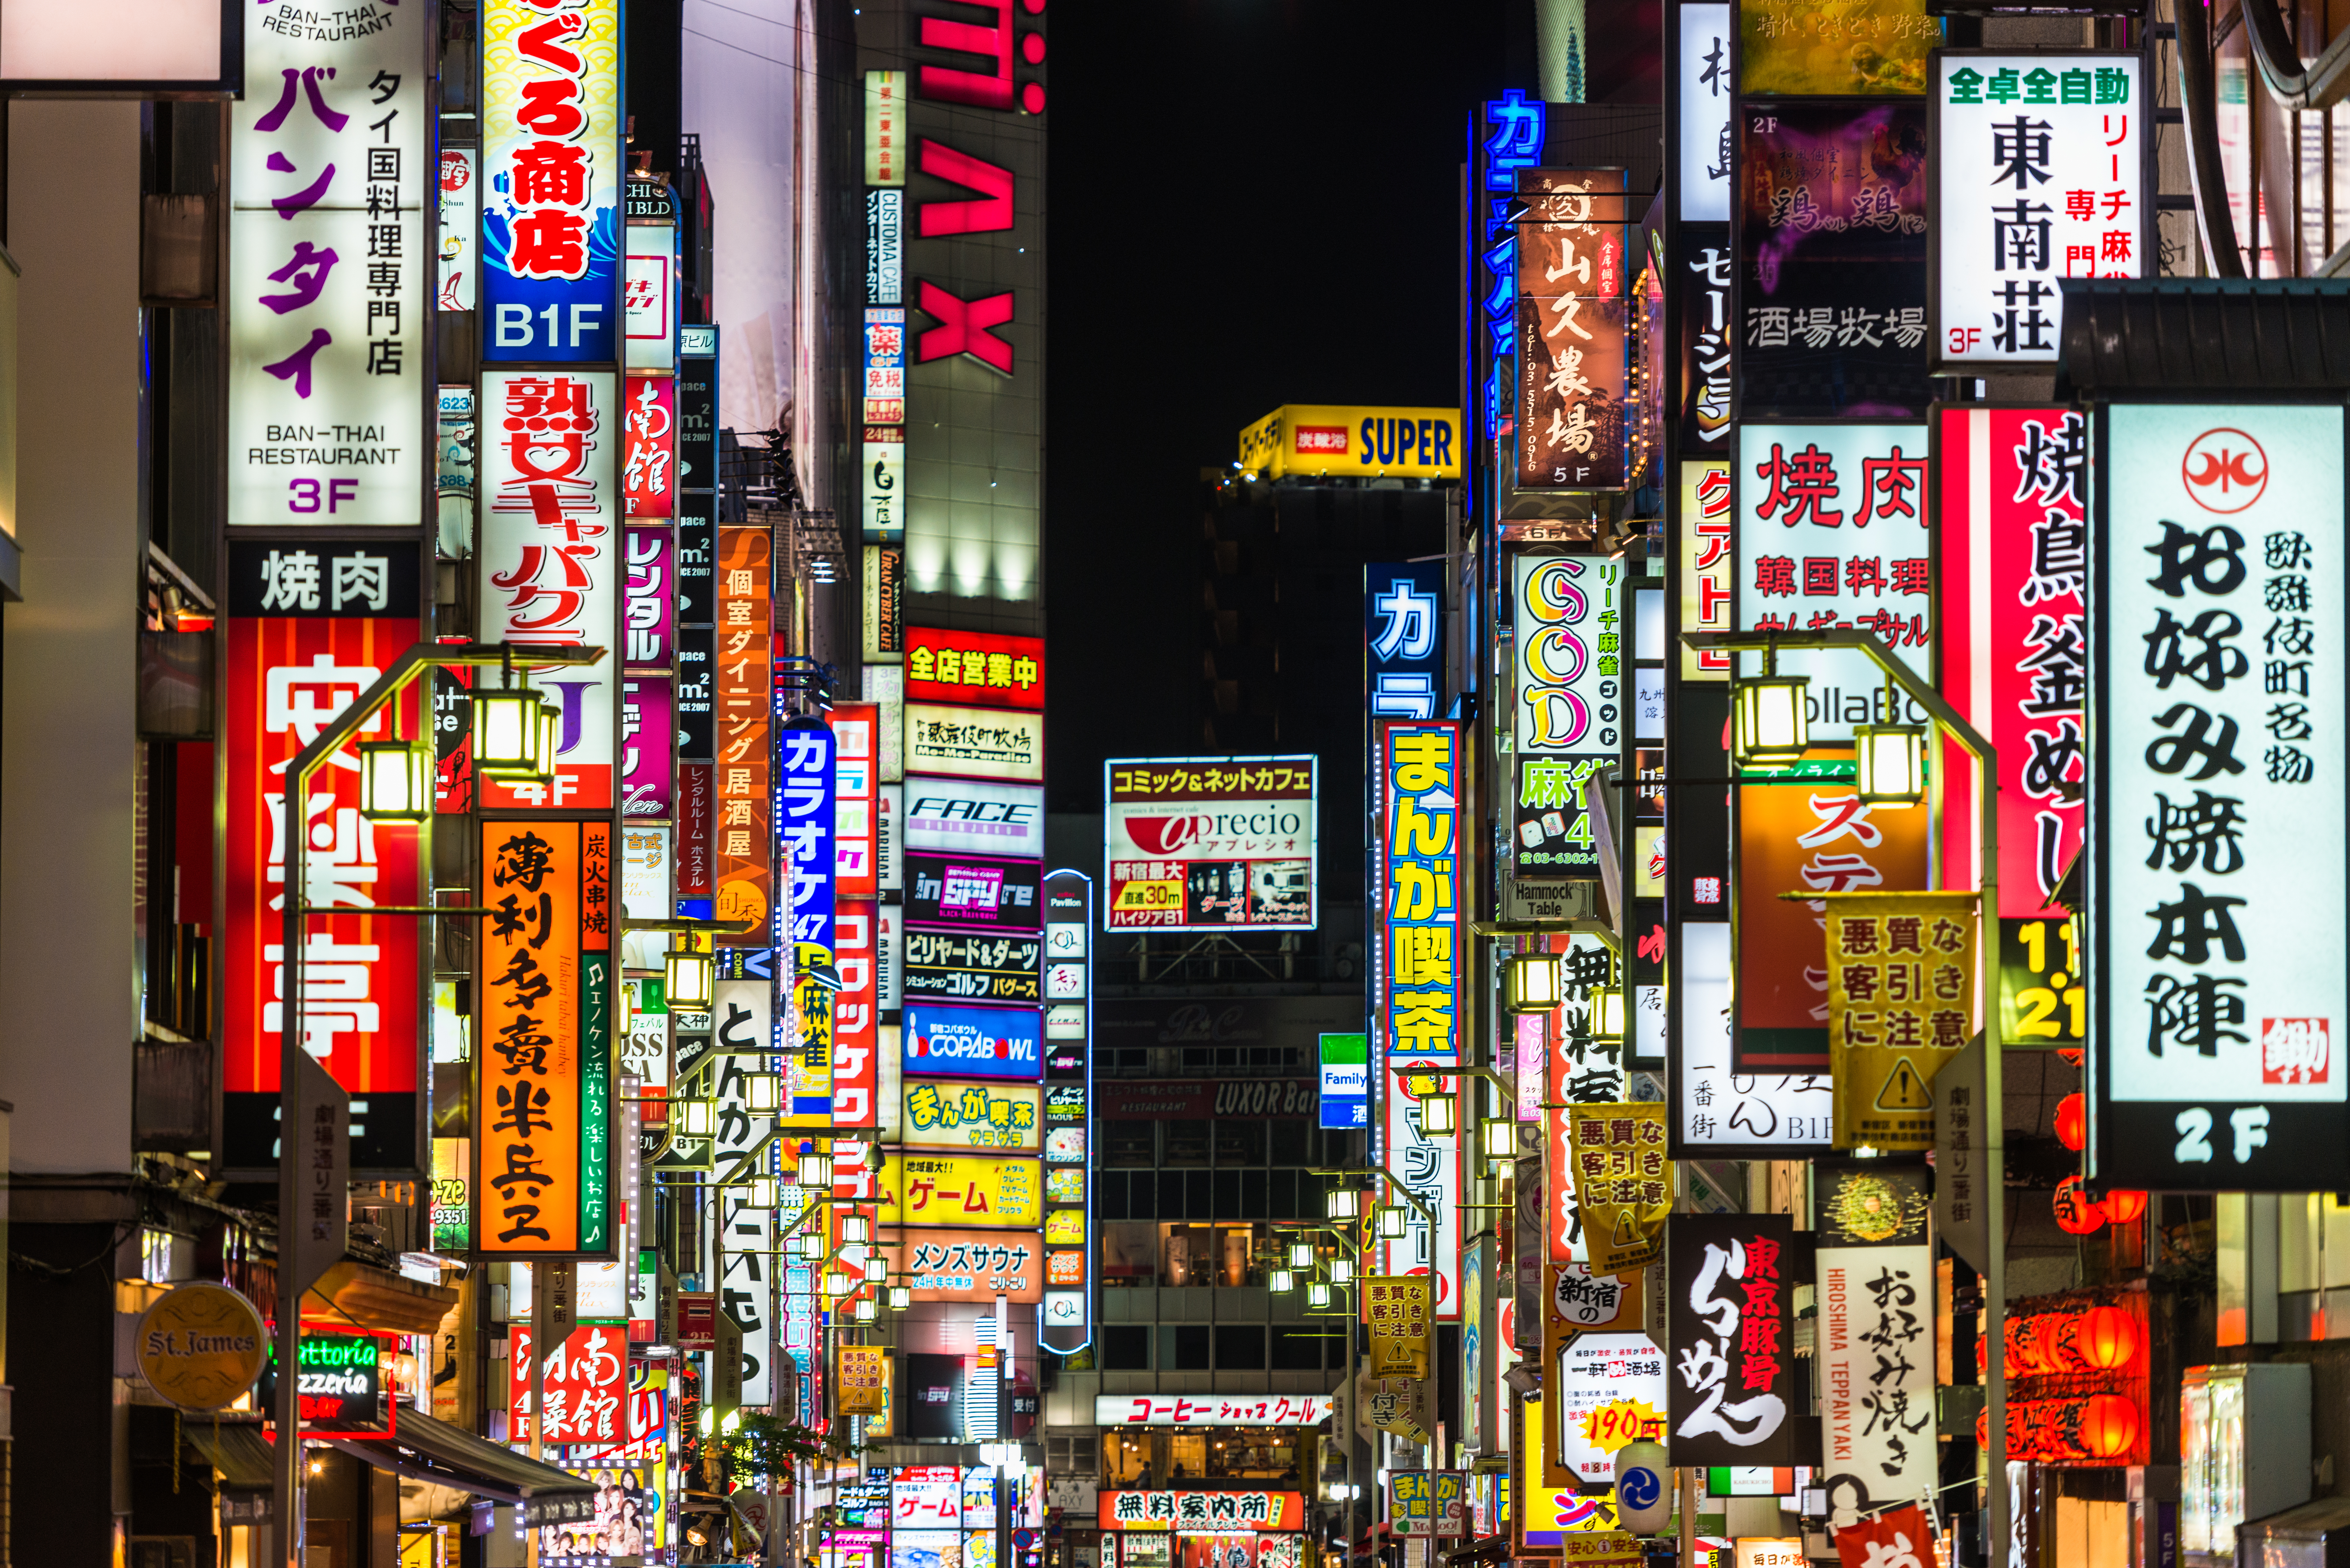 Tokyo, Japan. Image courtesy of superjoseph/Shutterstock.com